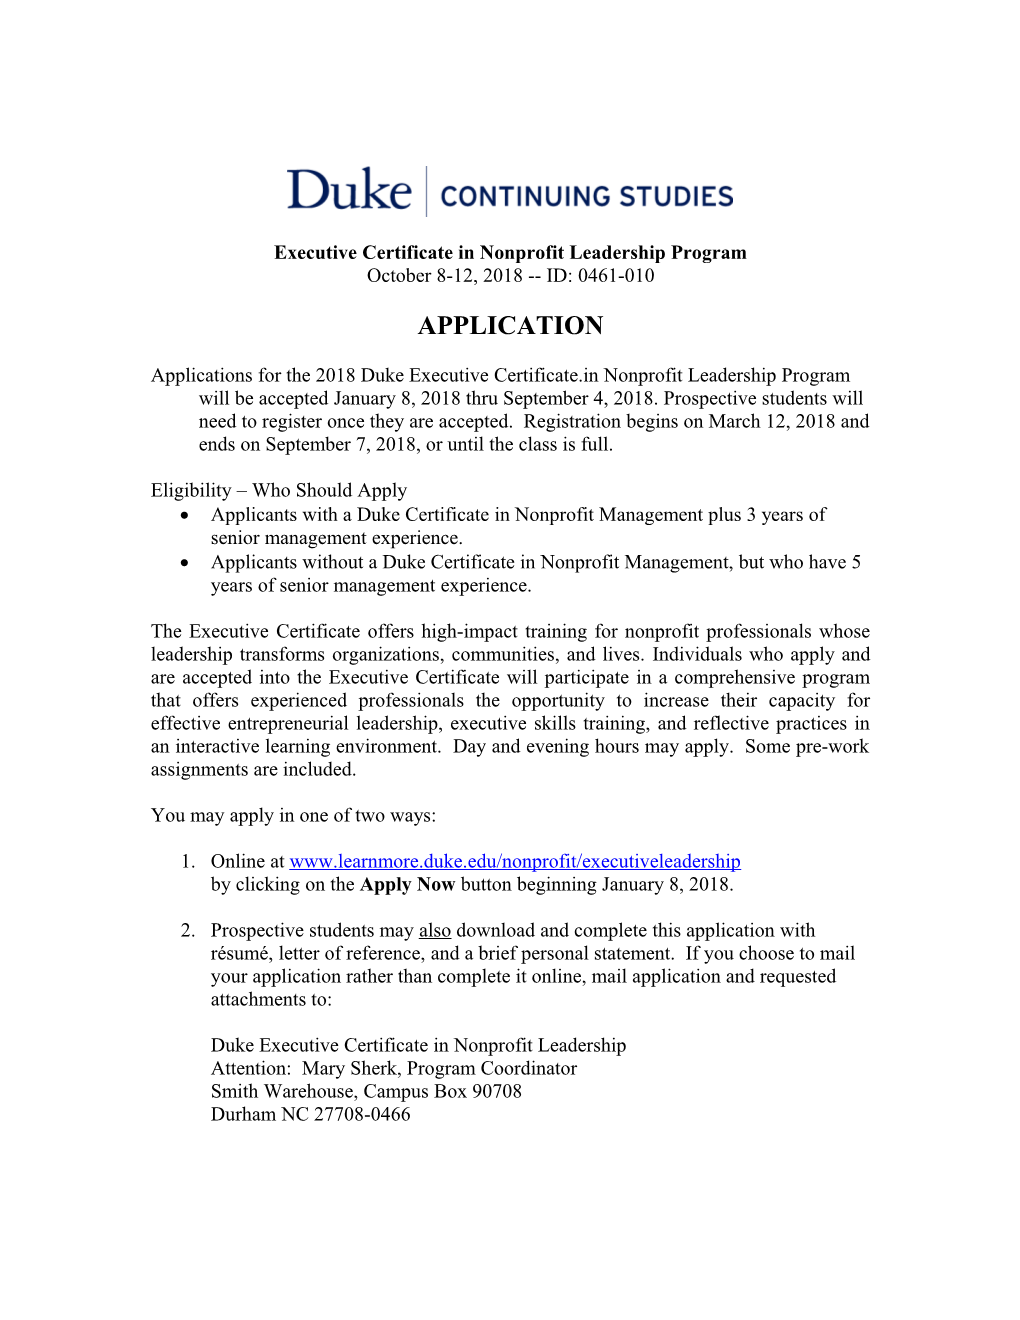 Duke University Nonprofit Management Program